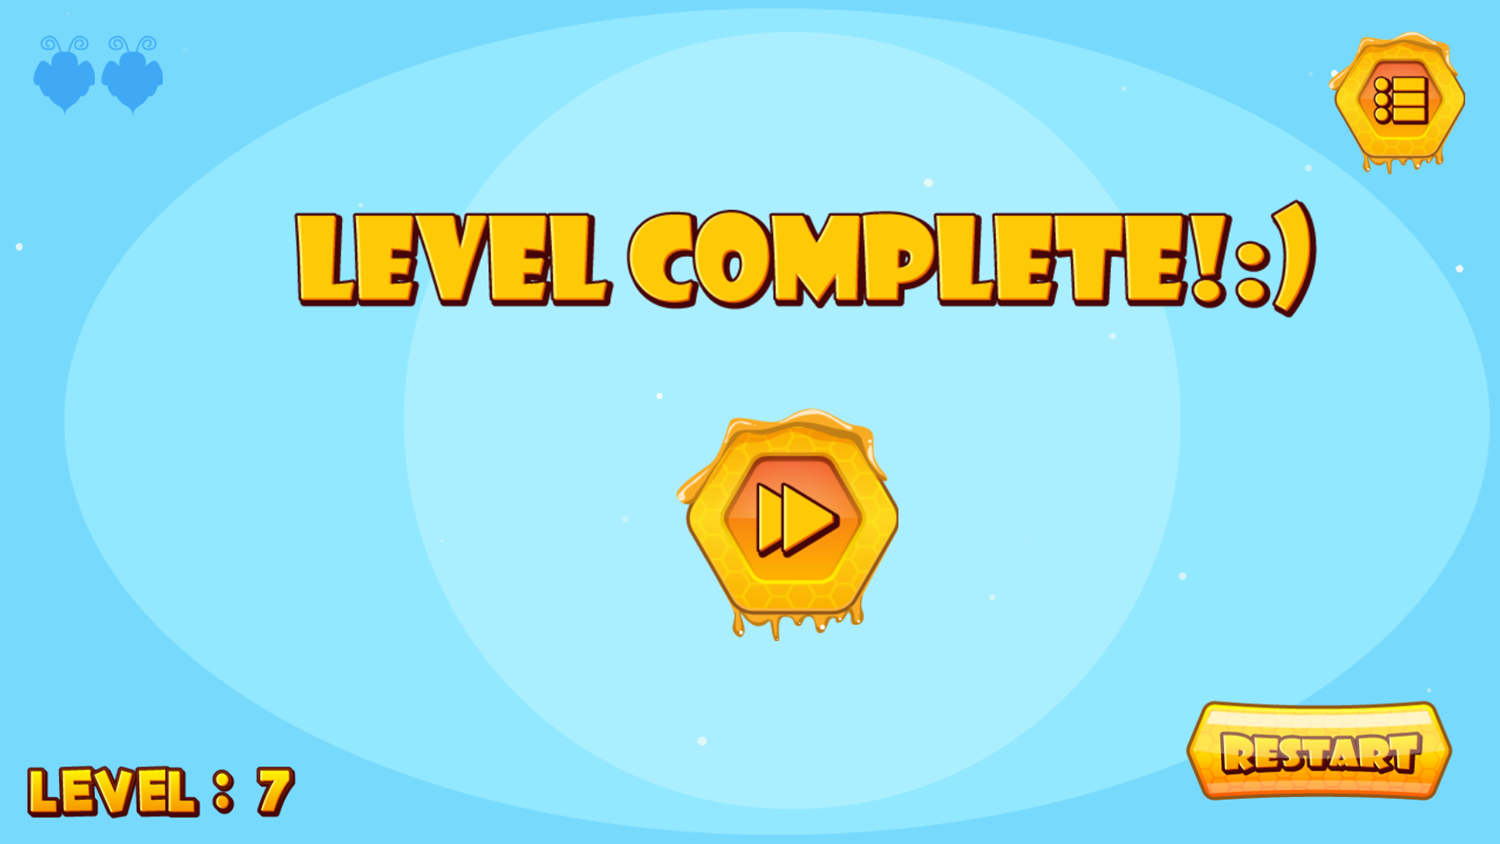 Beepio Game Level Complete Screenshot.